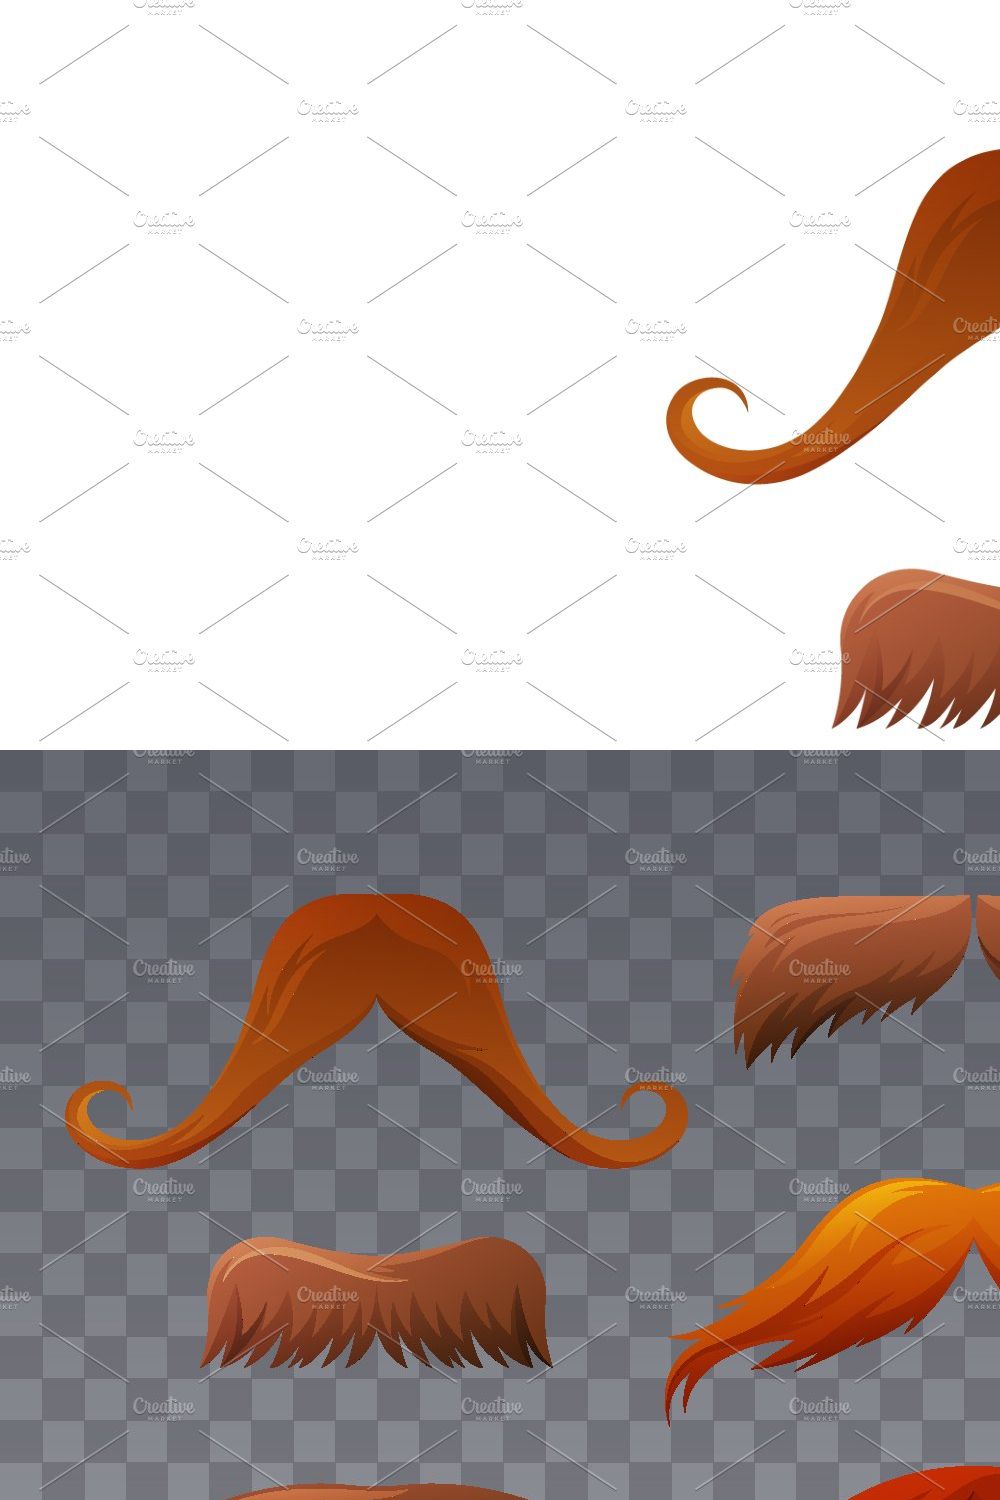 Mustache icons, vector set pinterest preview image.